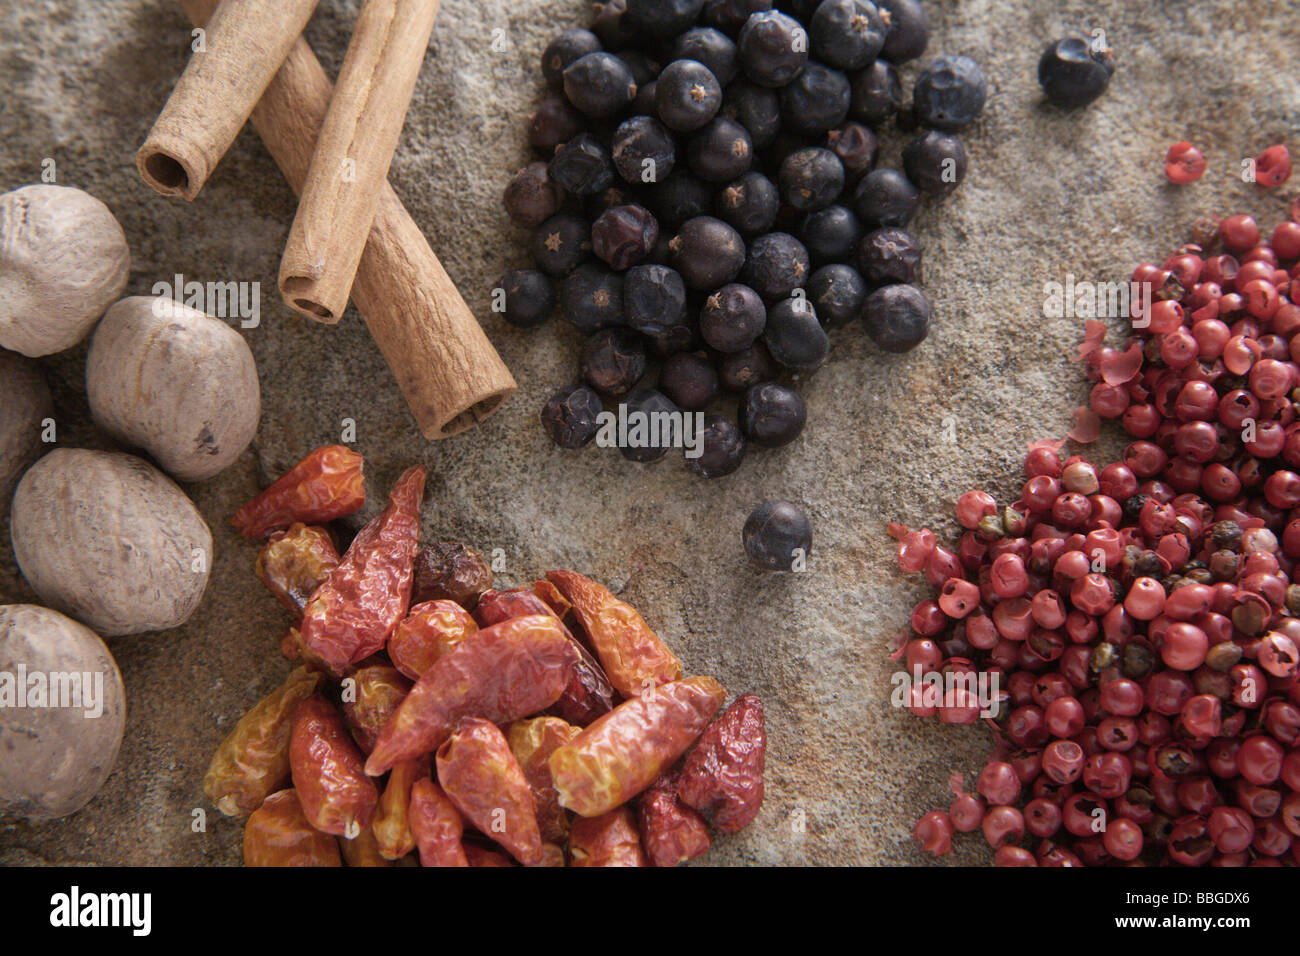 Spices, juniper, chili peppers, red pepper, nutmeg, cinnamon sticks Stock Photo